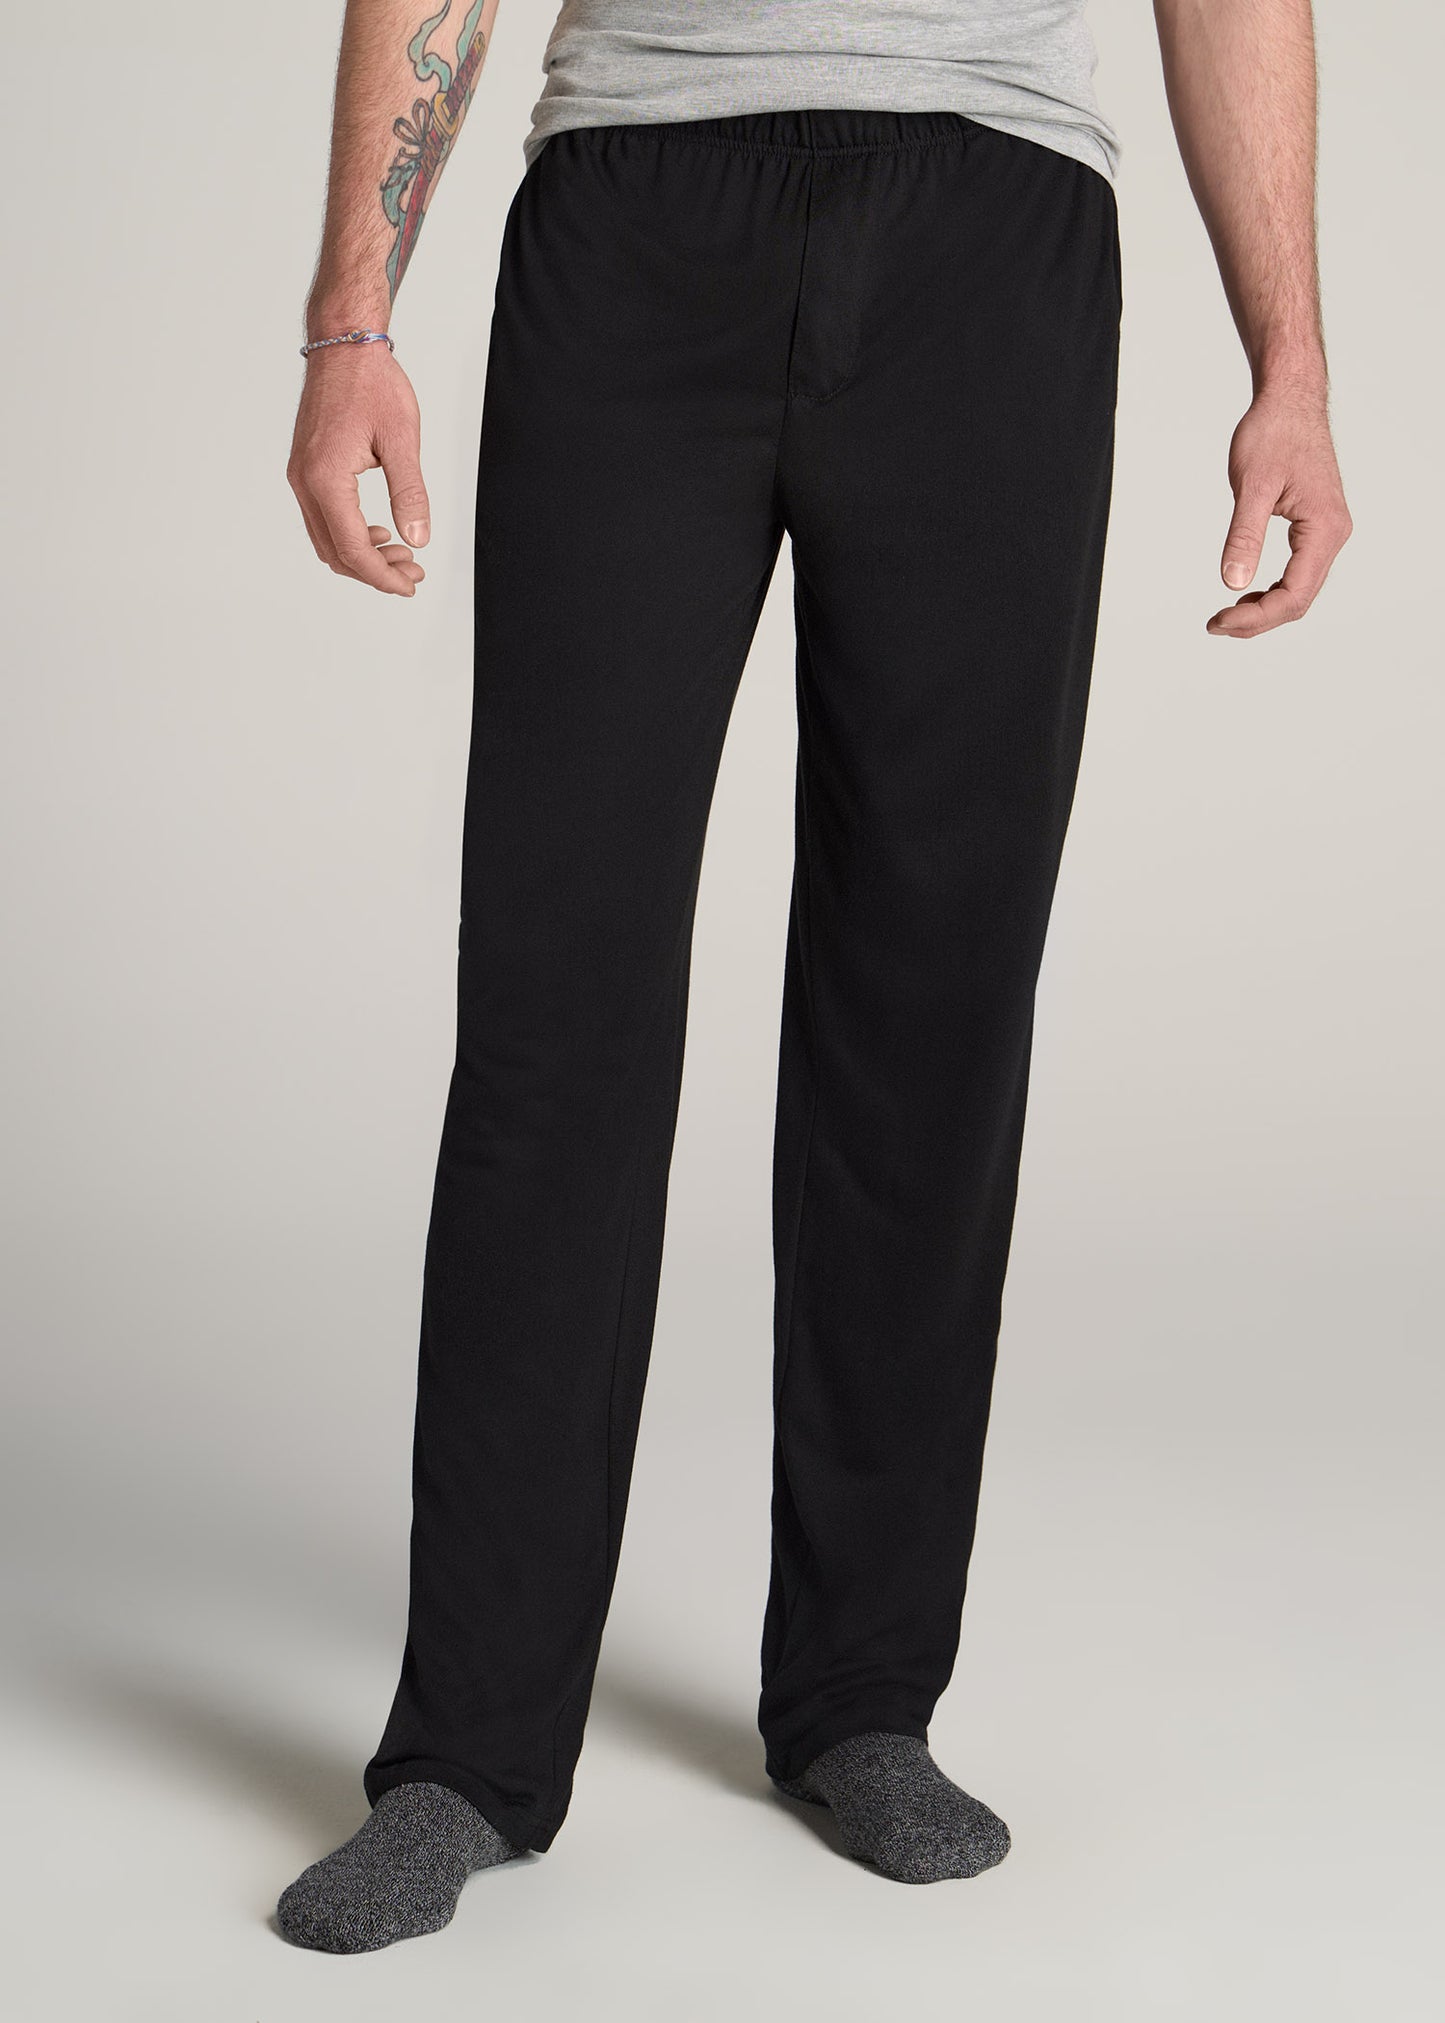 DKNY Men's Pants - 5 Pocket Pants for Men, Stretch Casual Pants for Men  Slim Fit Pants - Mens Performance Pants, Comfortable Slim Fit Work Pants  for Men